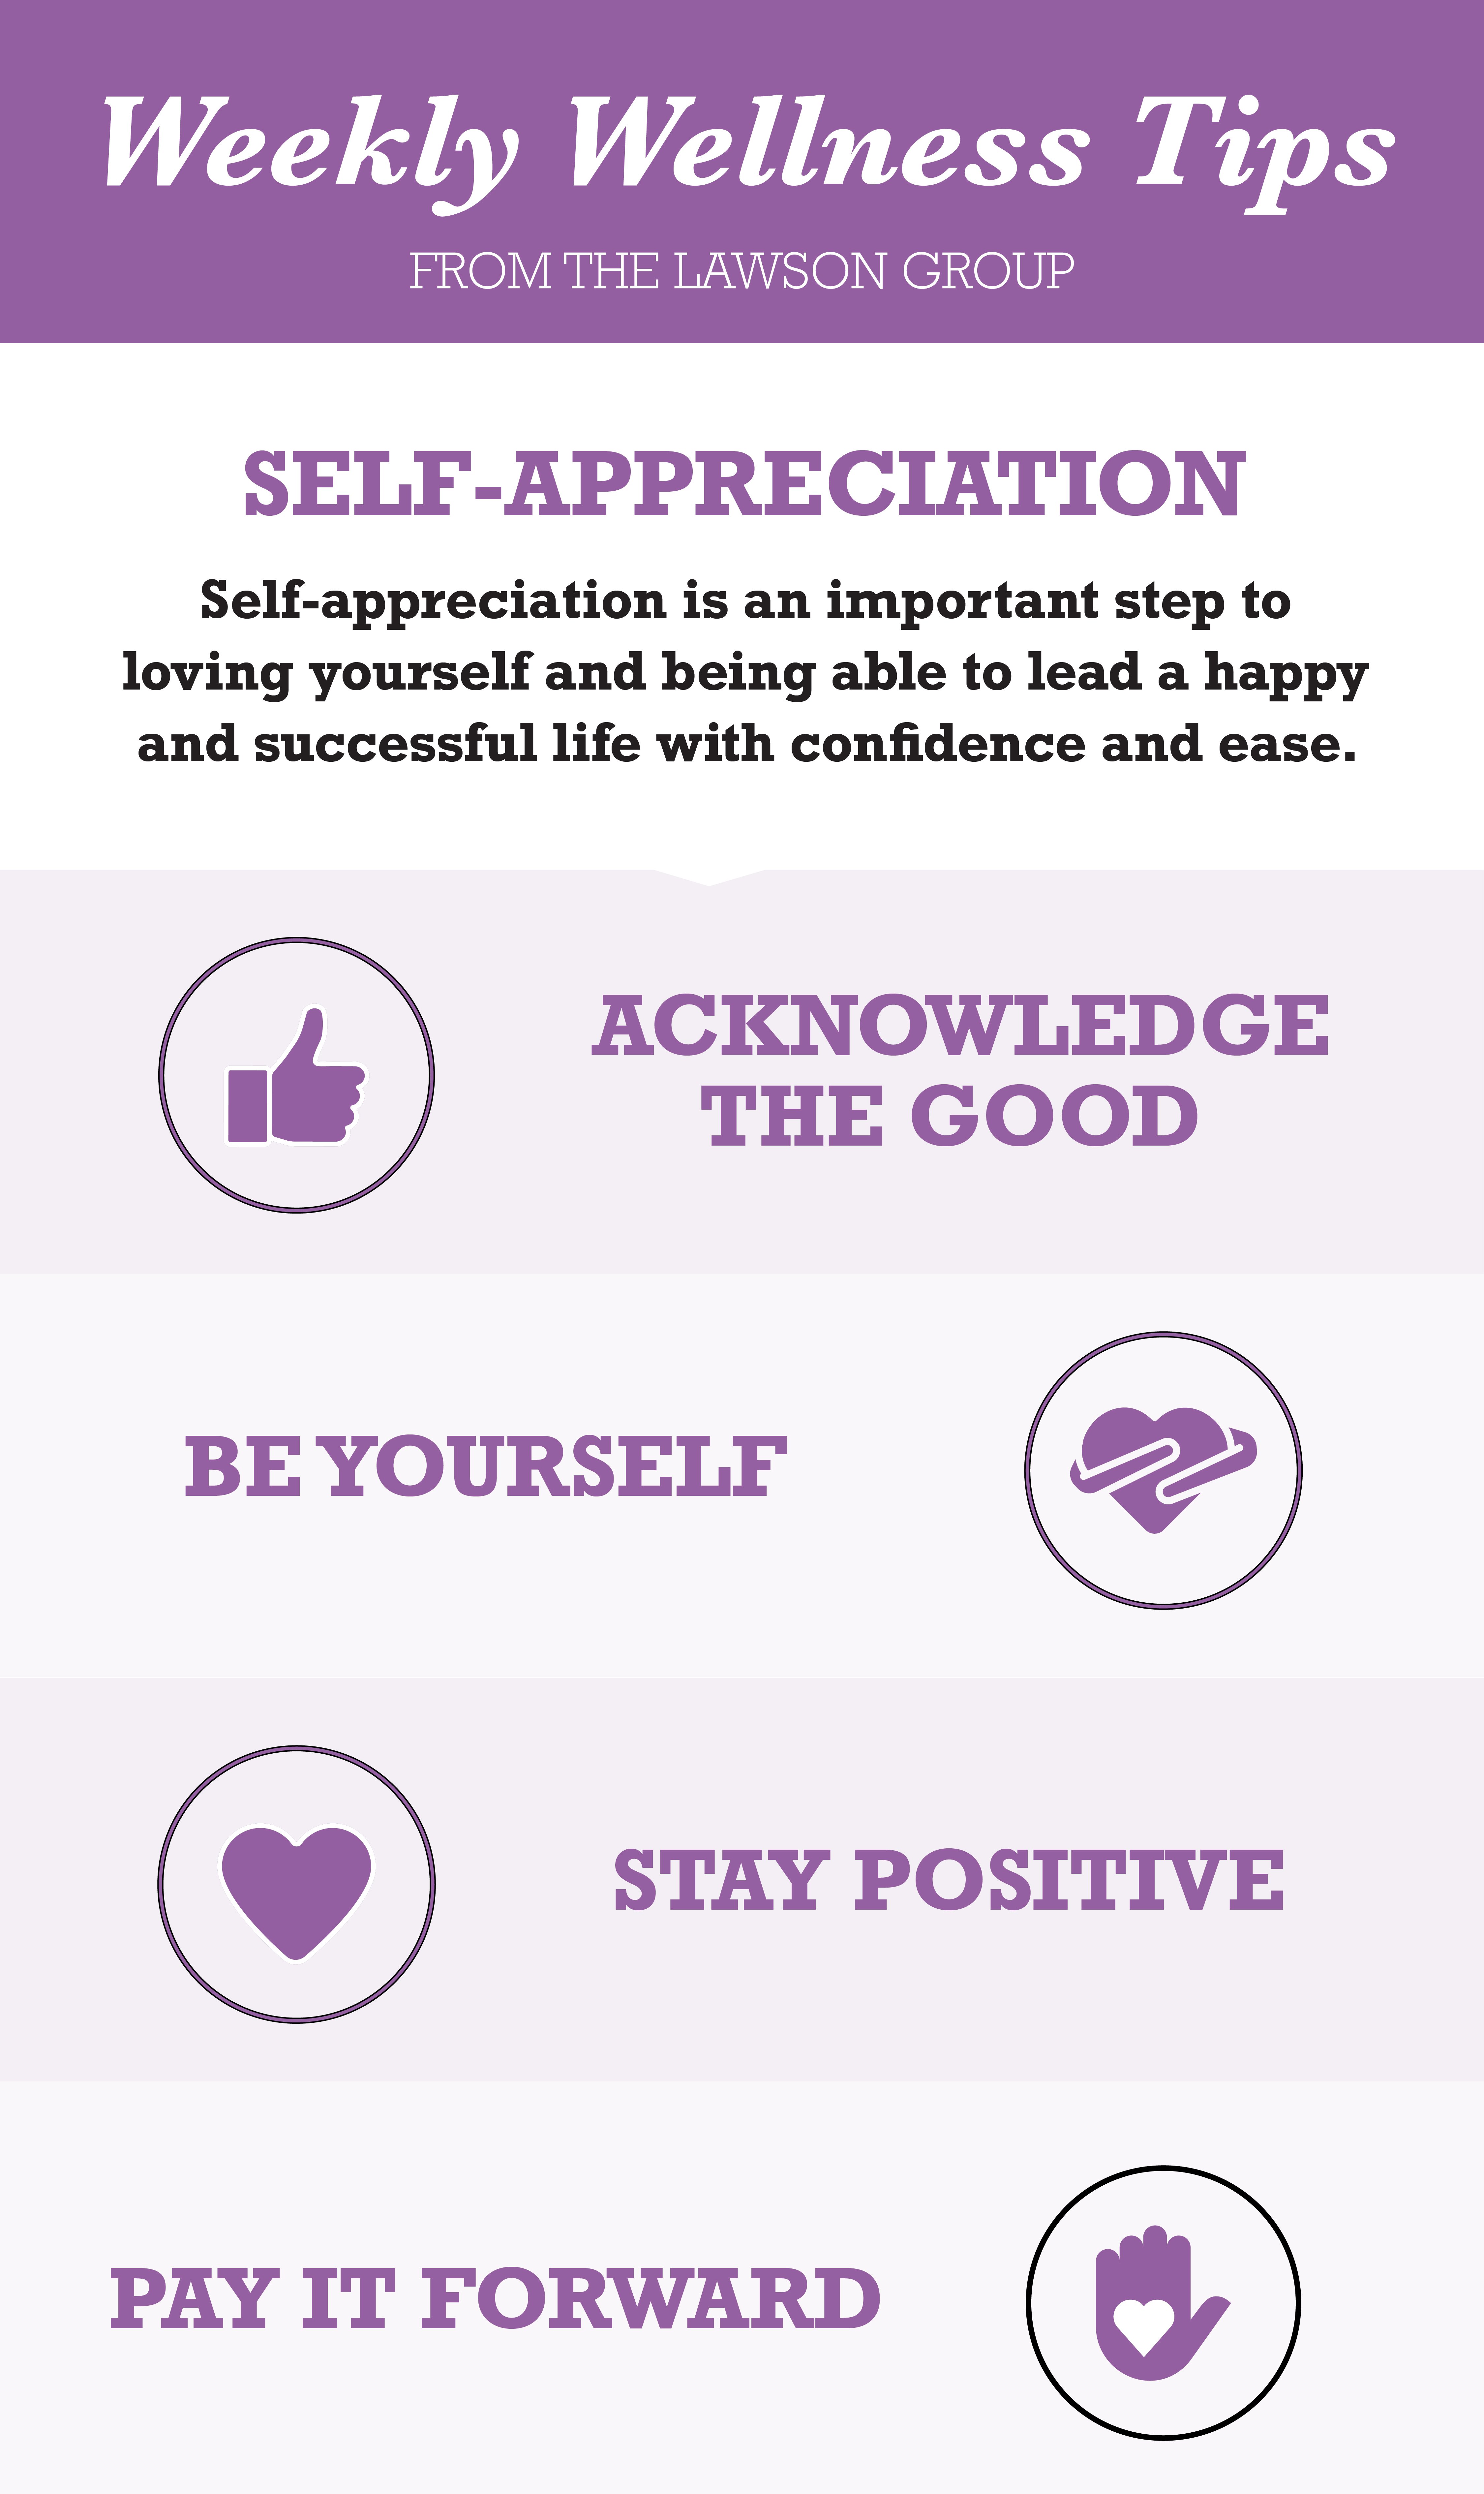 TLG22005 Wellness Tips Self-Appreciation Infographic-1080px-01